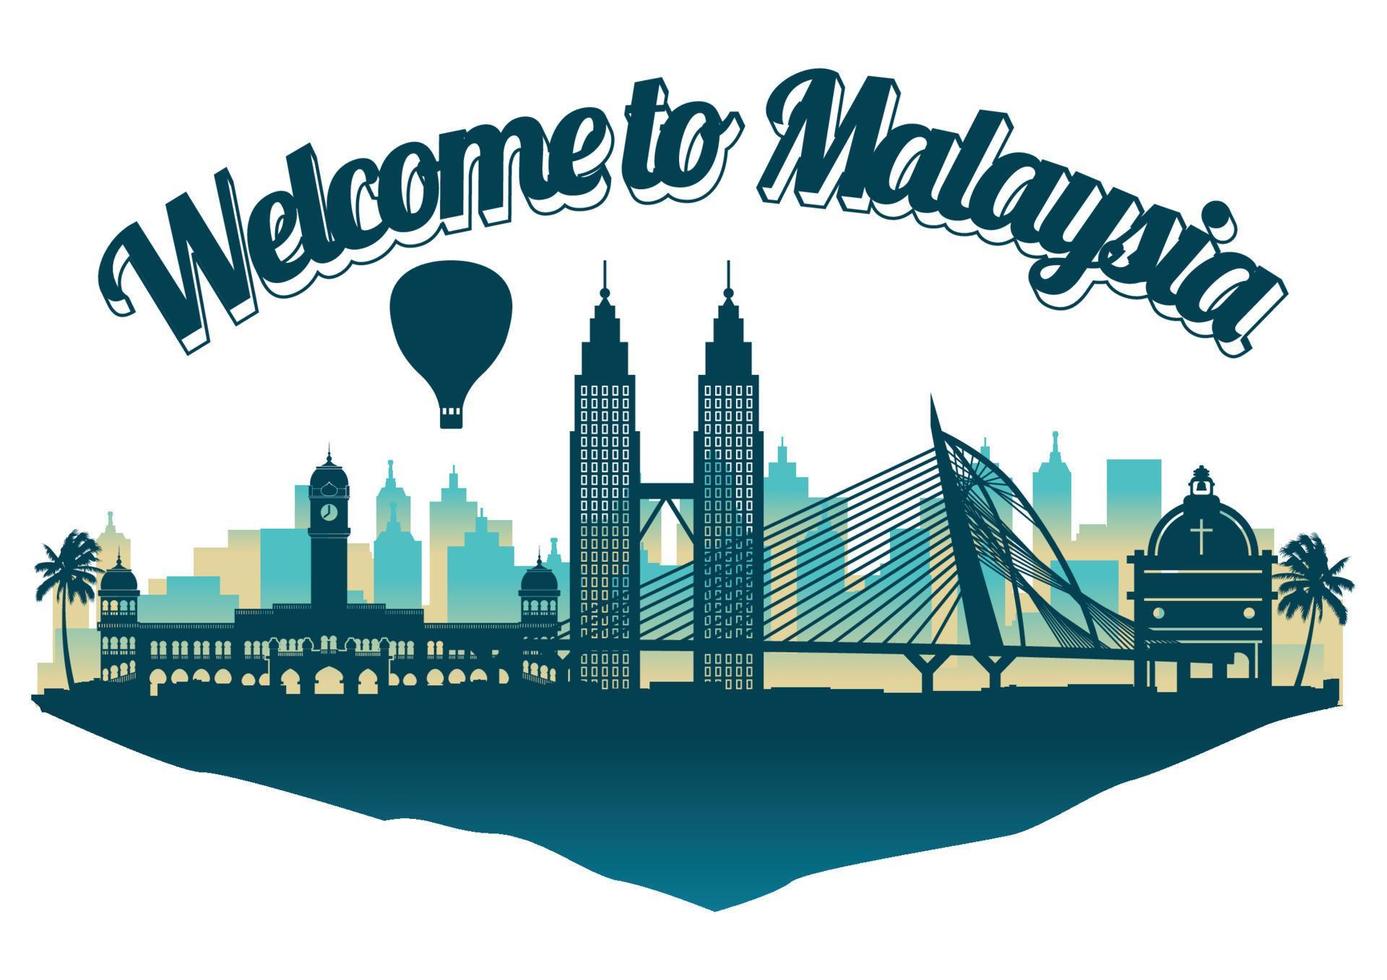 Malaysia famous landmark silhouette style on float island vector